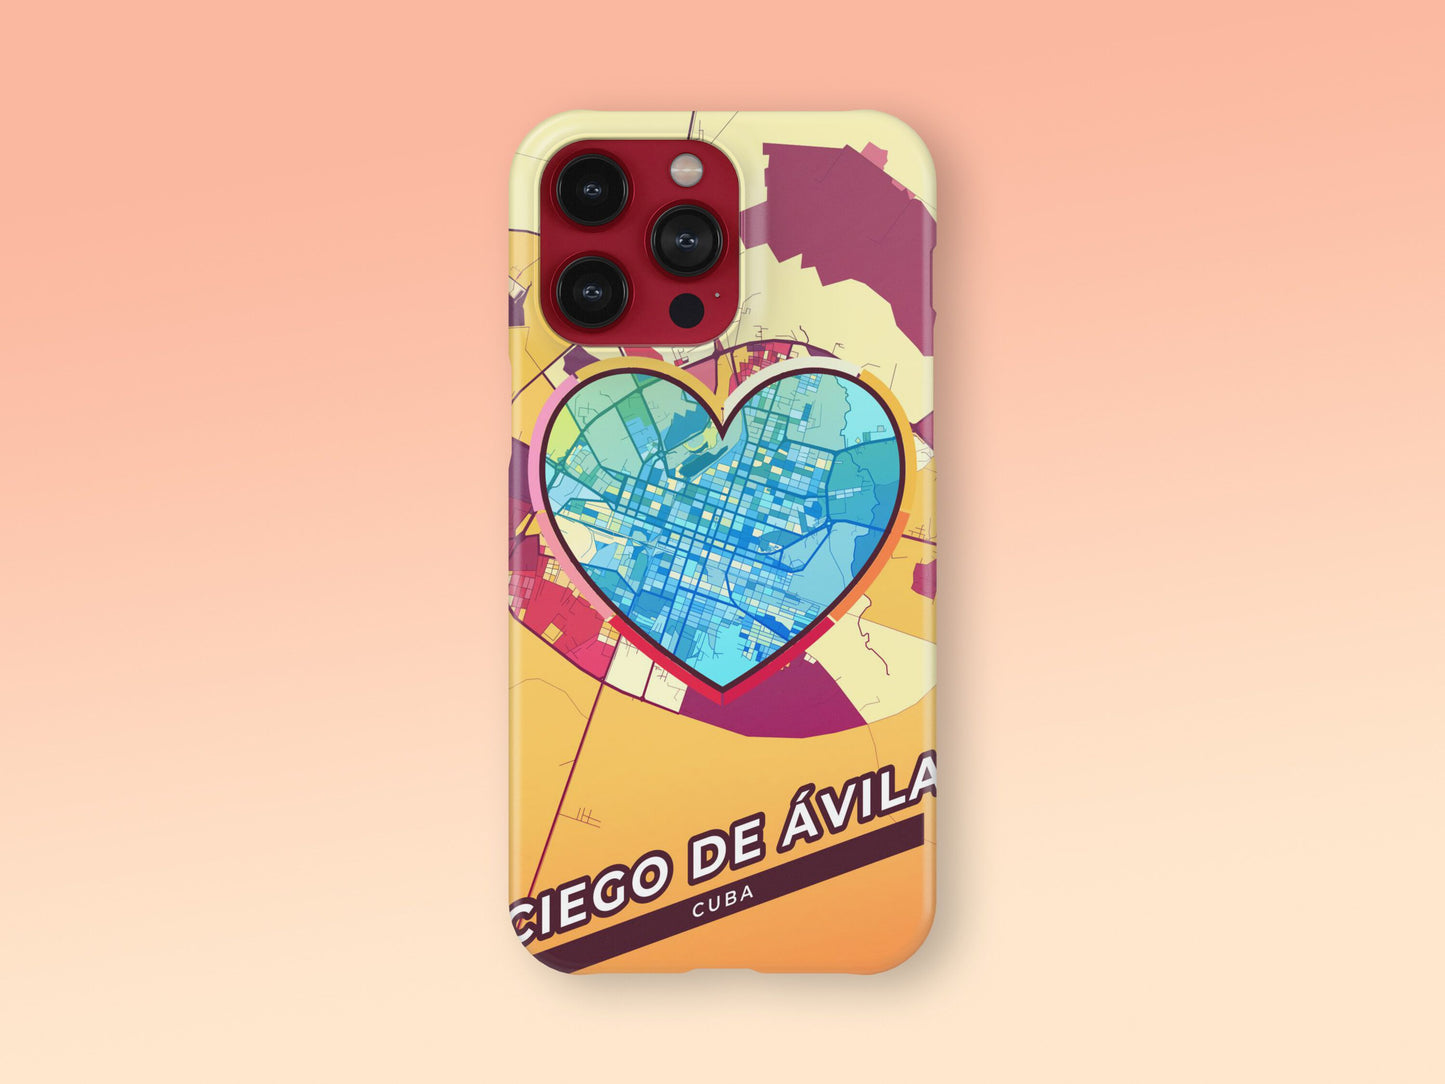 Ciego De Ávila Cuba slim phone case with colorful icon. Birthday, wedding or housewarming gift. Couple match cases. 2